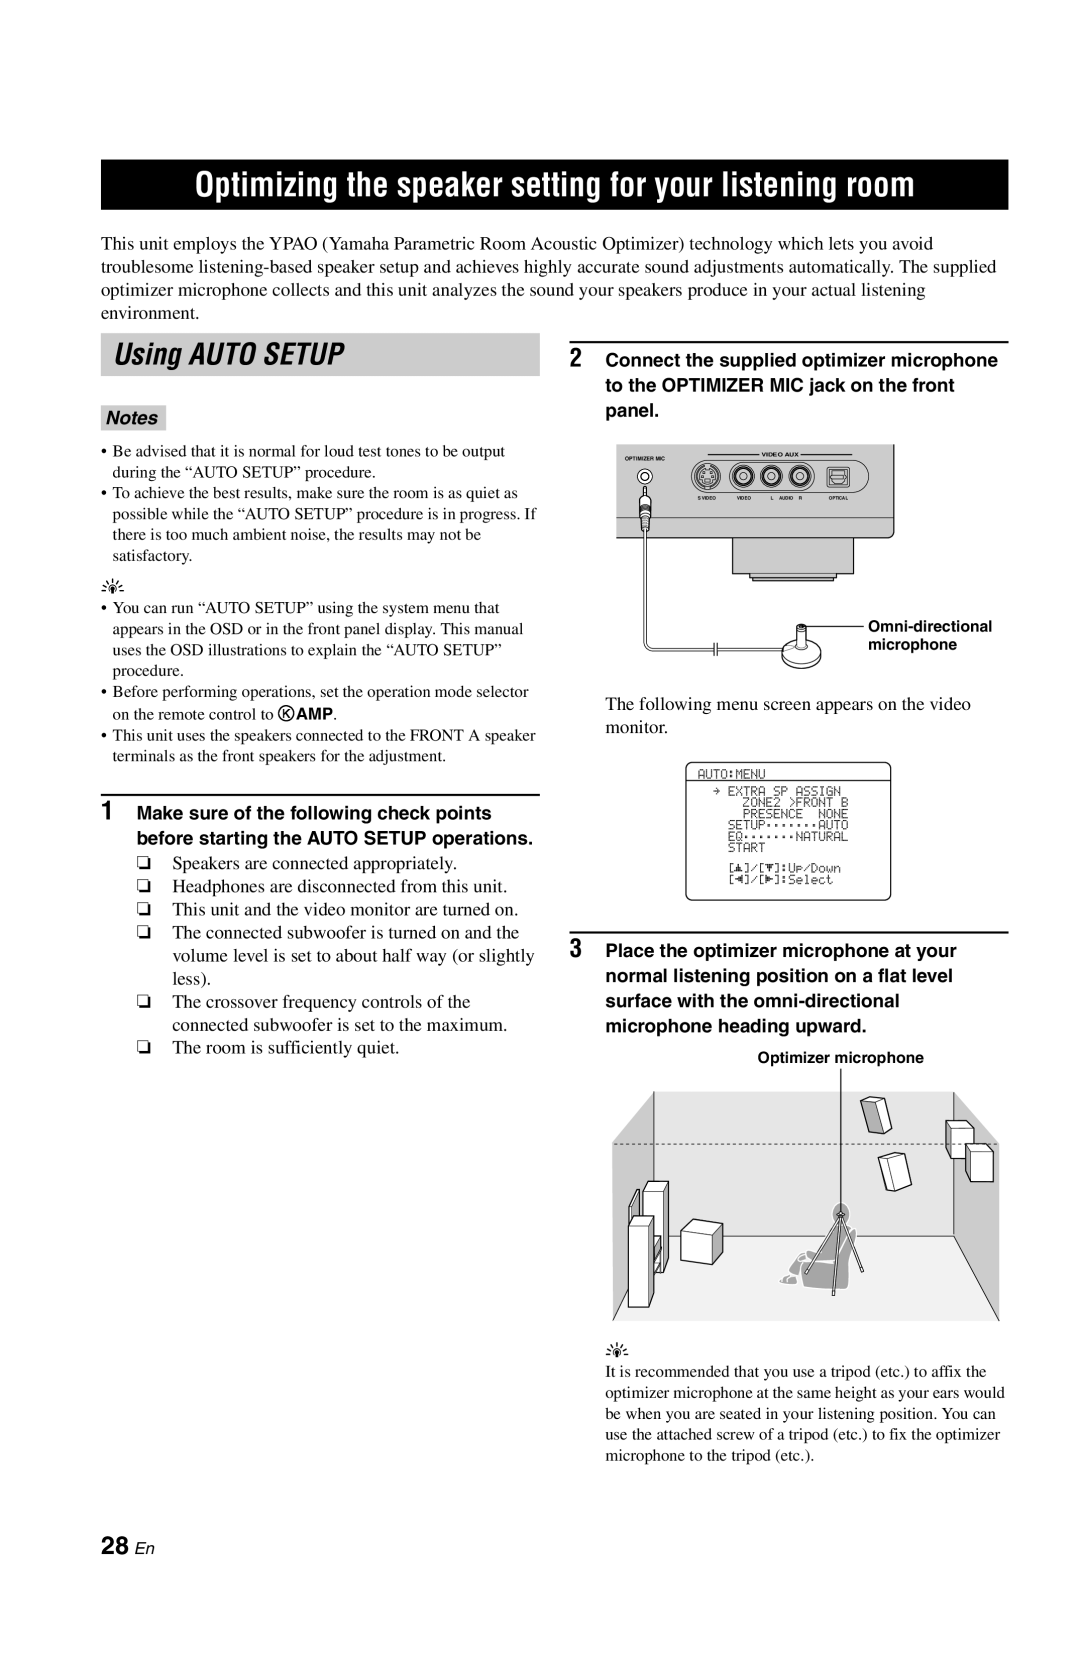 Yamaha RX-V861 owner manual Using AUTO SETUP, 28 En, Notes 